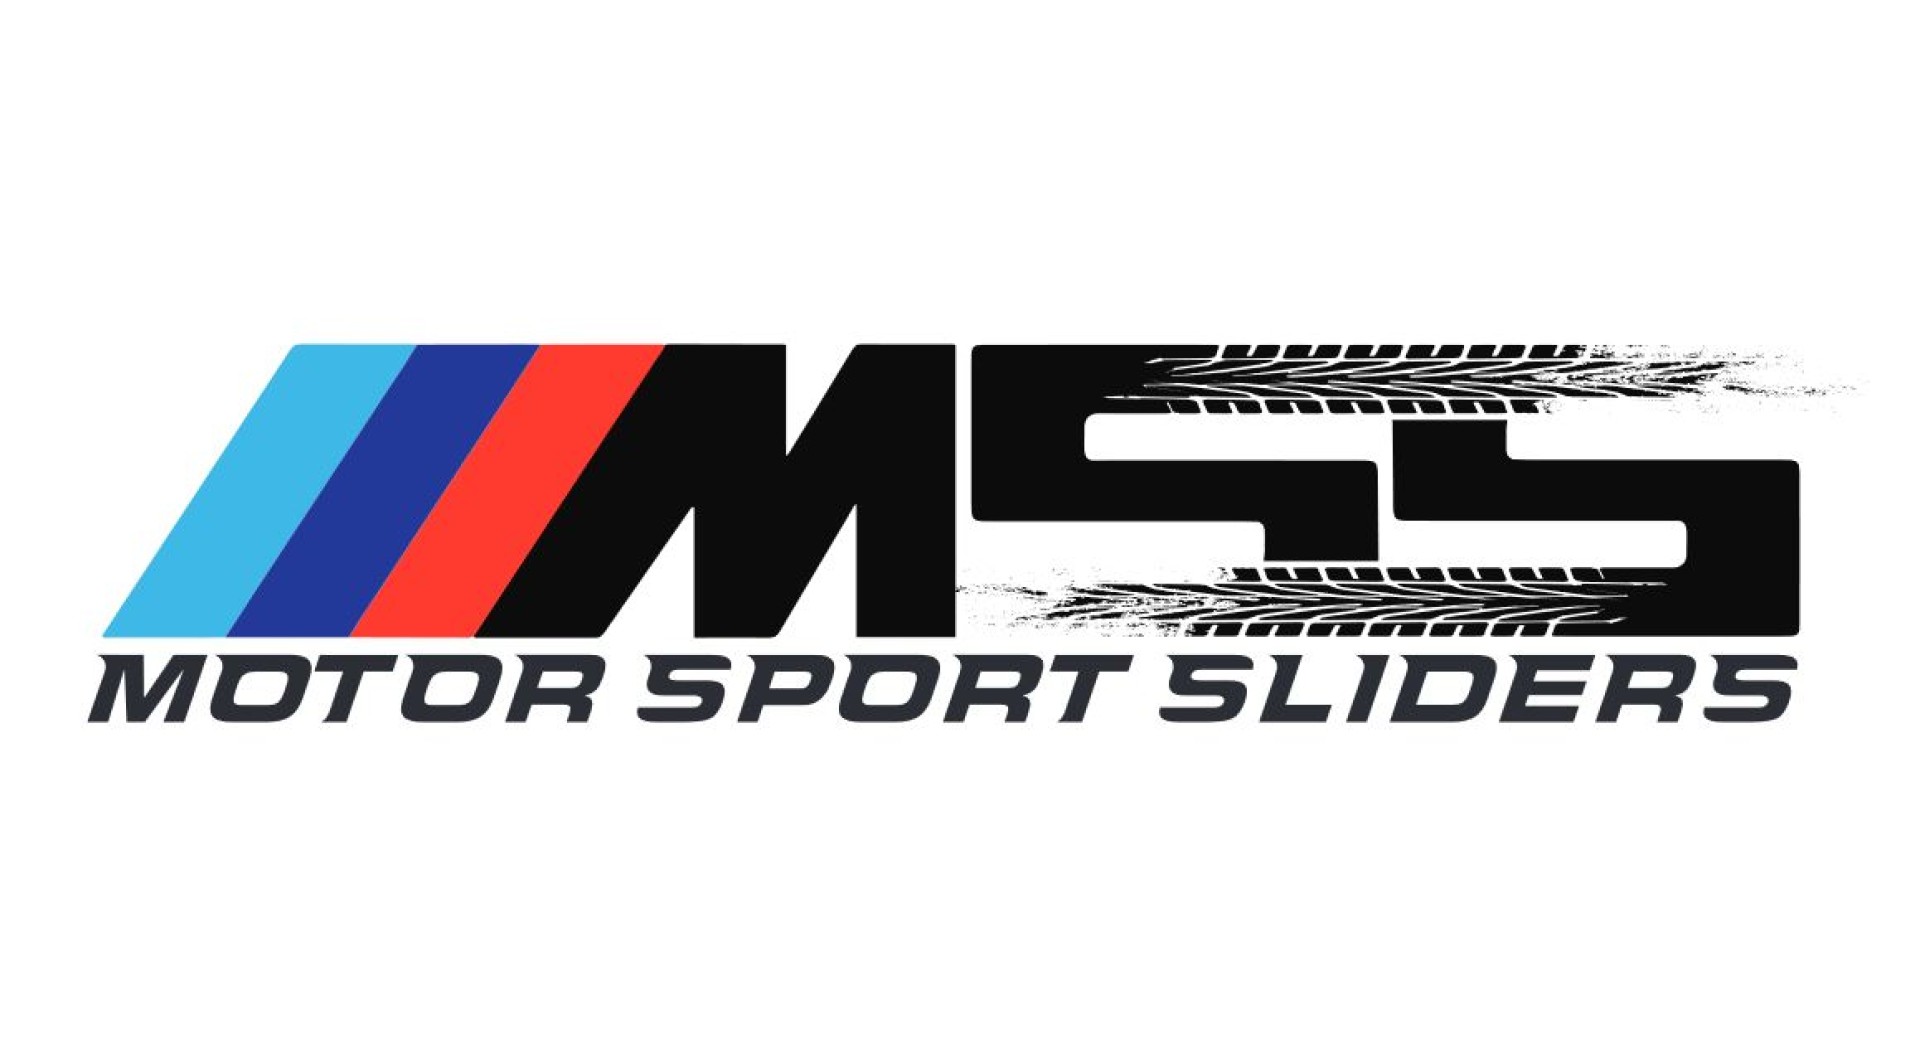 Motor Sport Sliders (MSS) logo